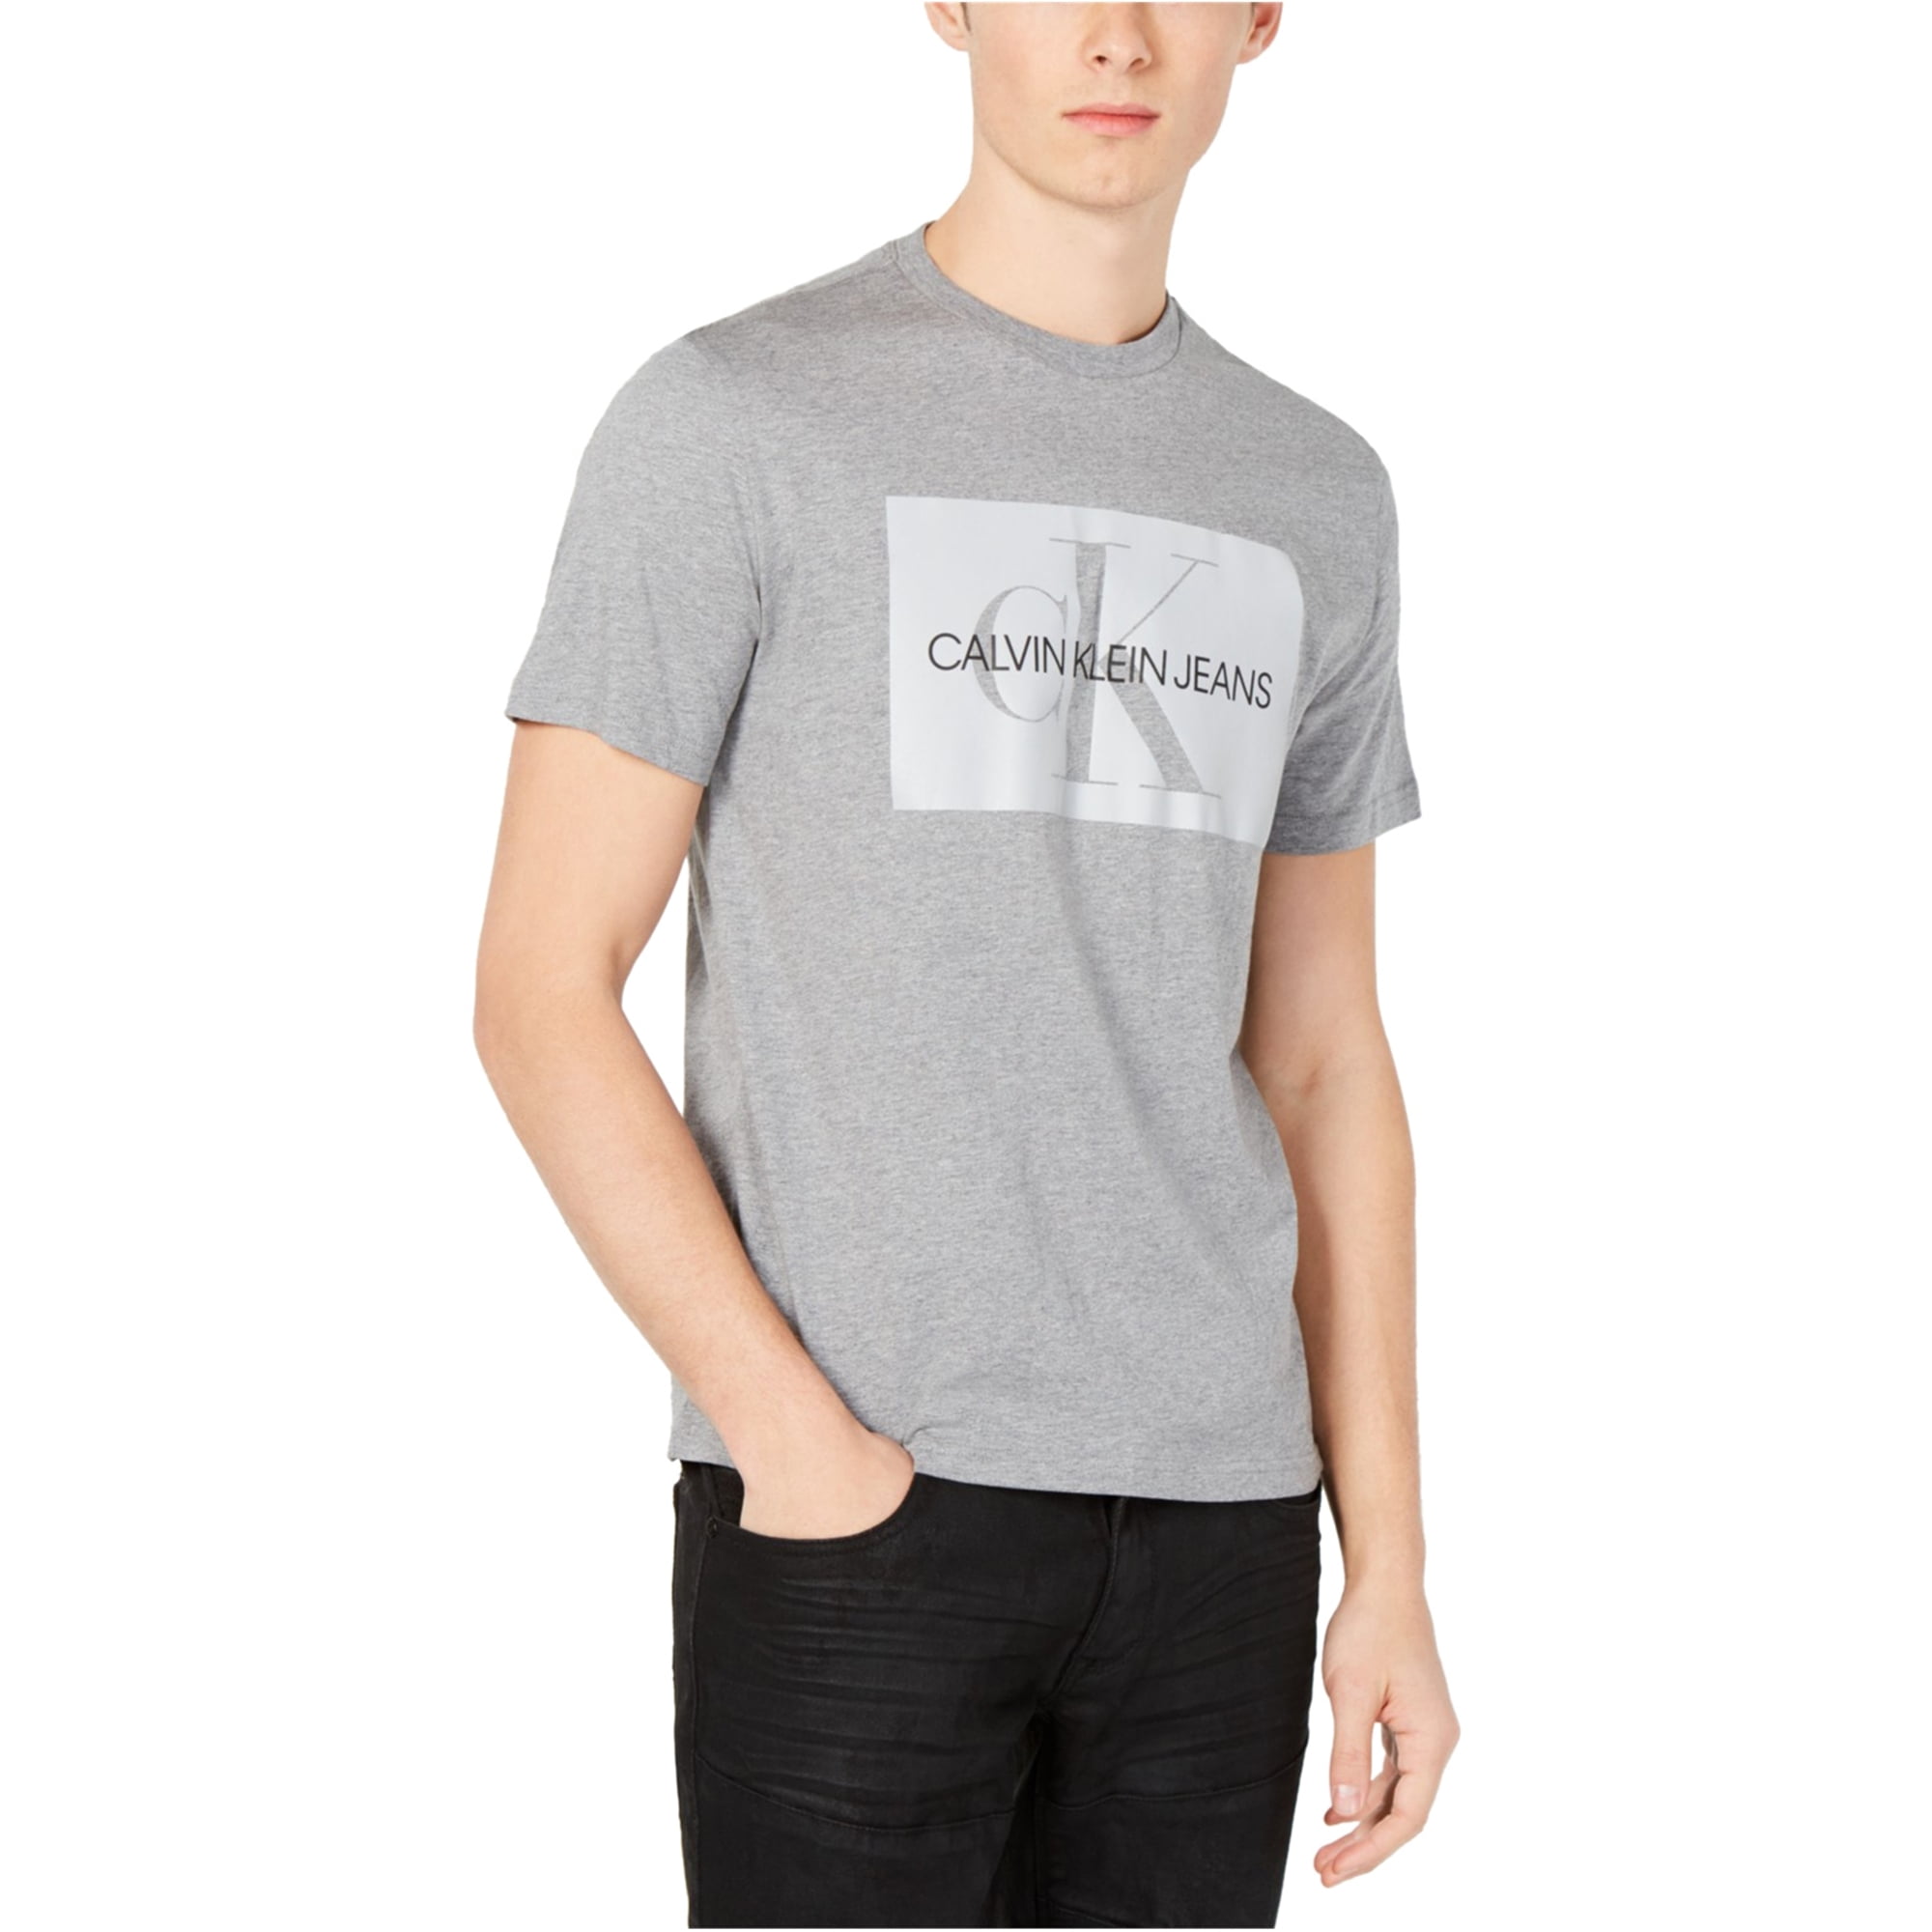 Calvin Klein Men's T Shirts India Hot Sale, SAVE 51%.